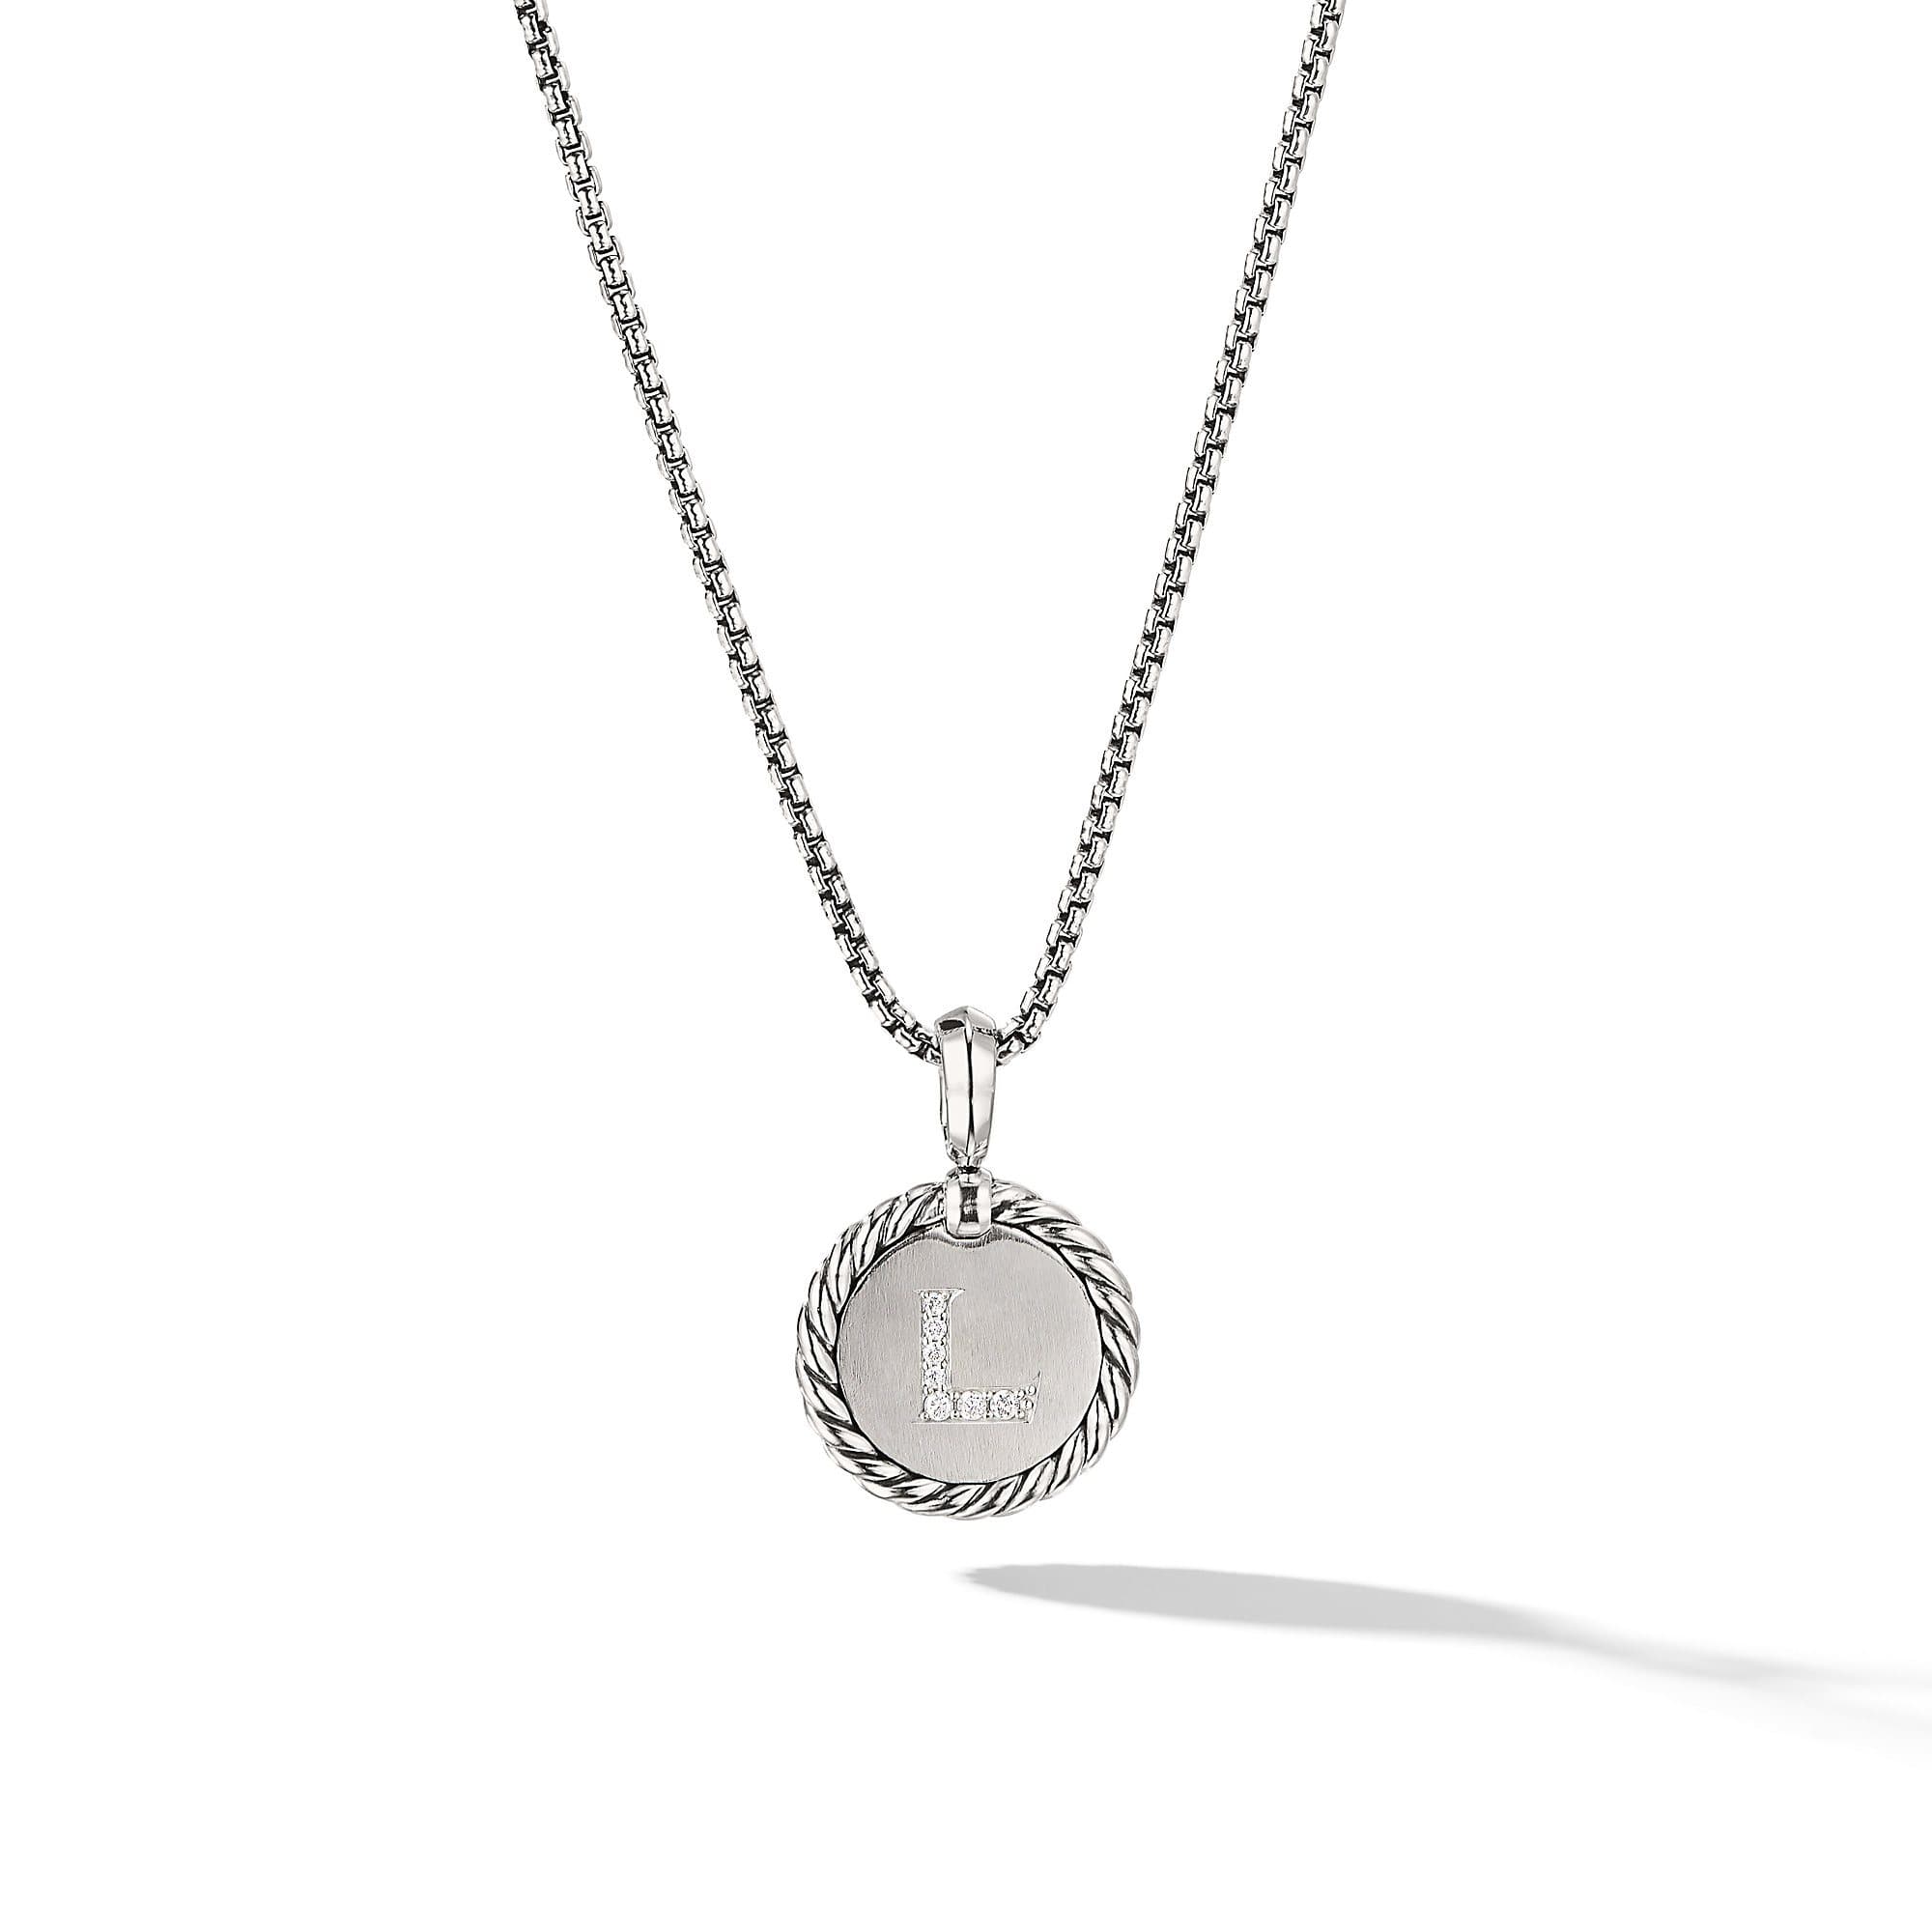 David Yurman L Initial Charm Necklace with Diamonds